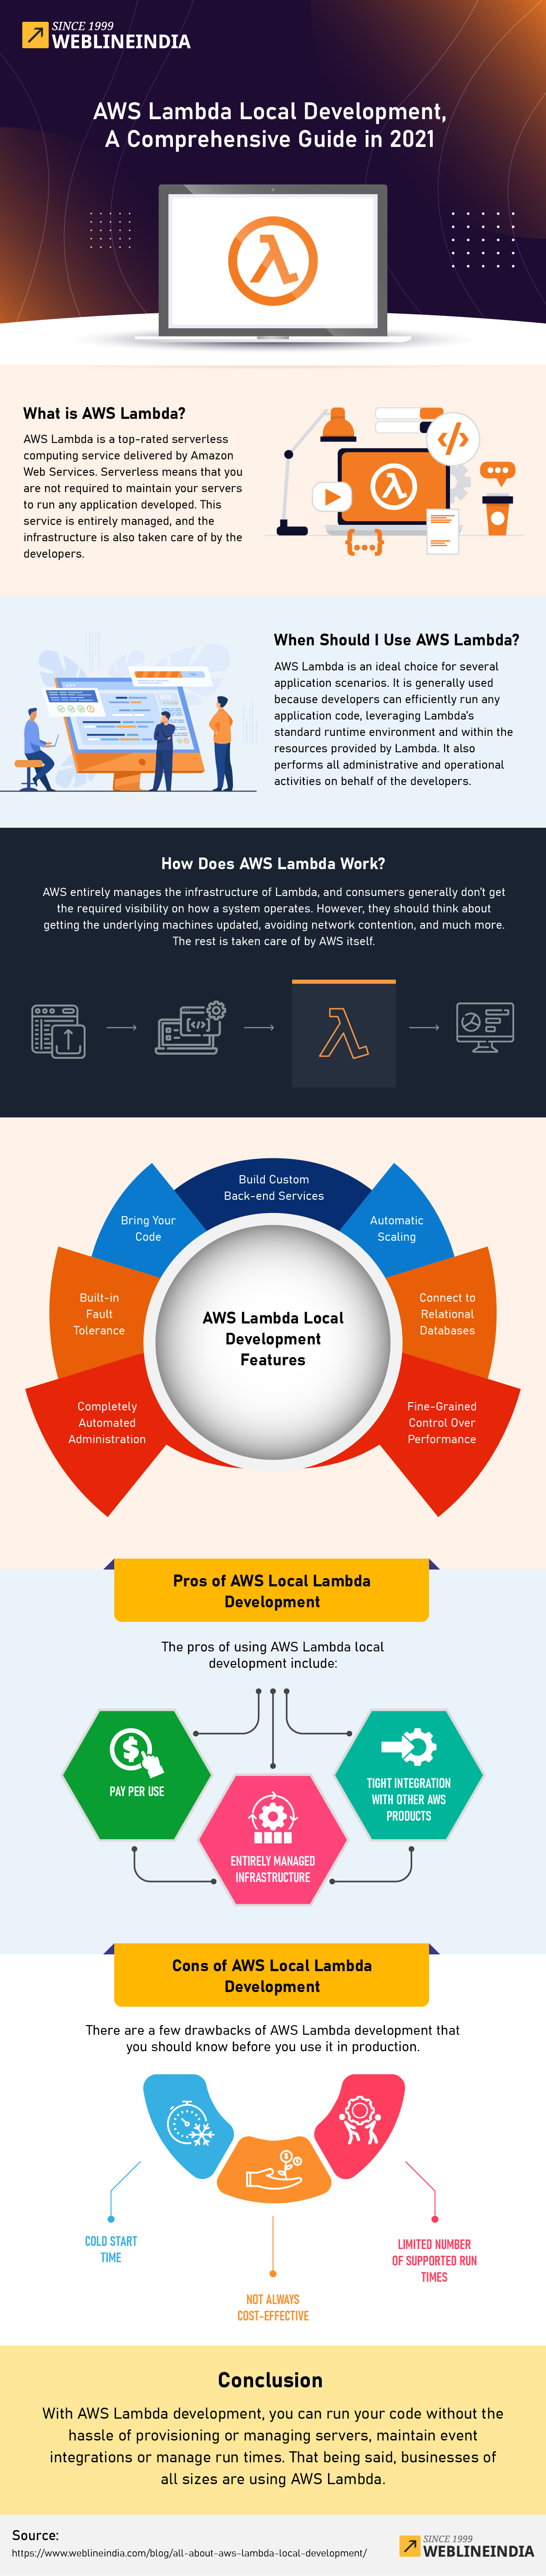 AWS Lambda Local Development Infographic